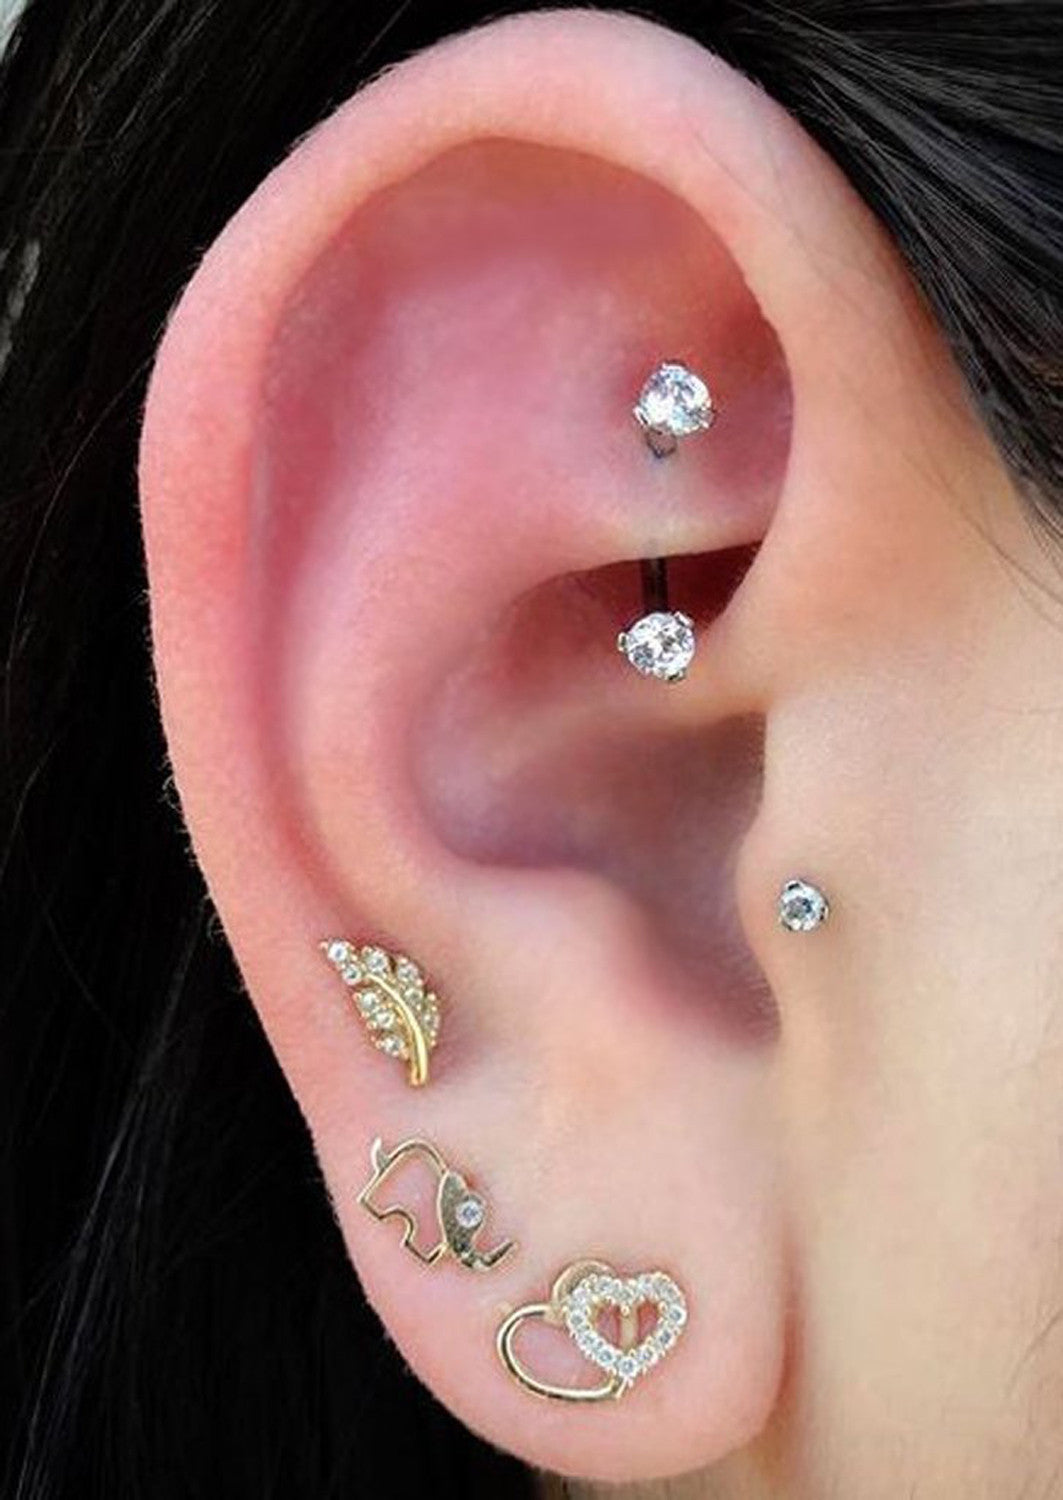 Multiple Ear Piercing Ideas at MyBodiArt.com - Rook Earring Jewelry 16G Barbell - Daith Earring 